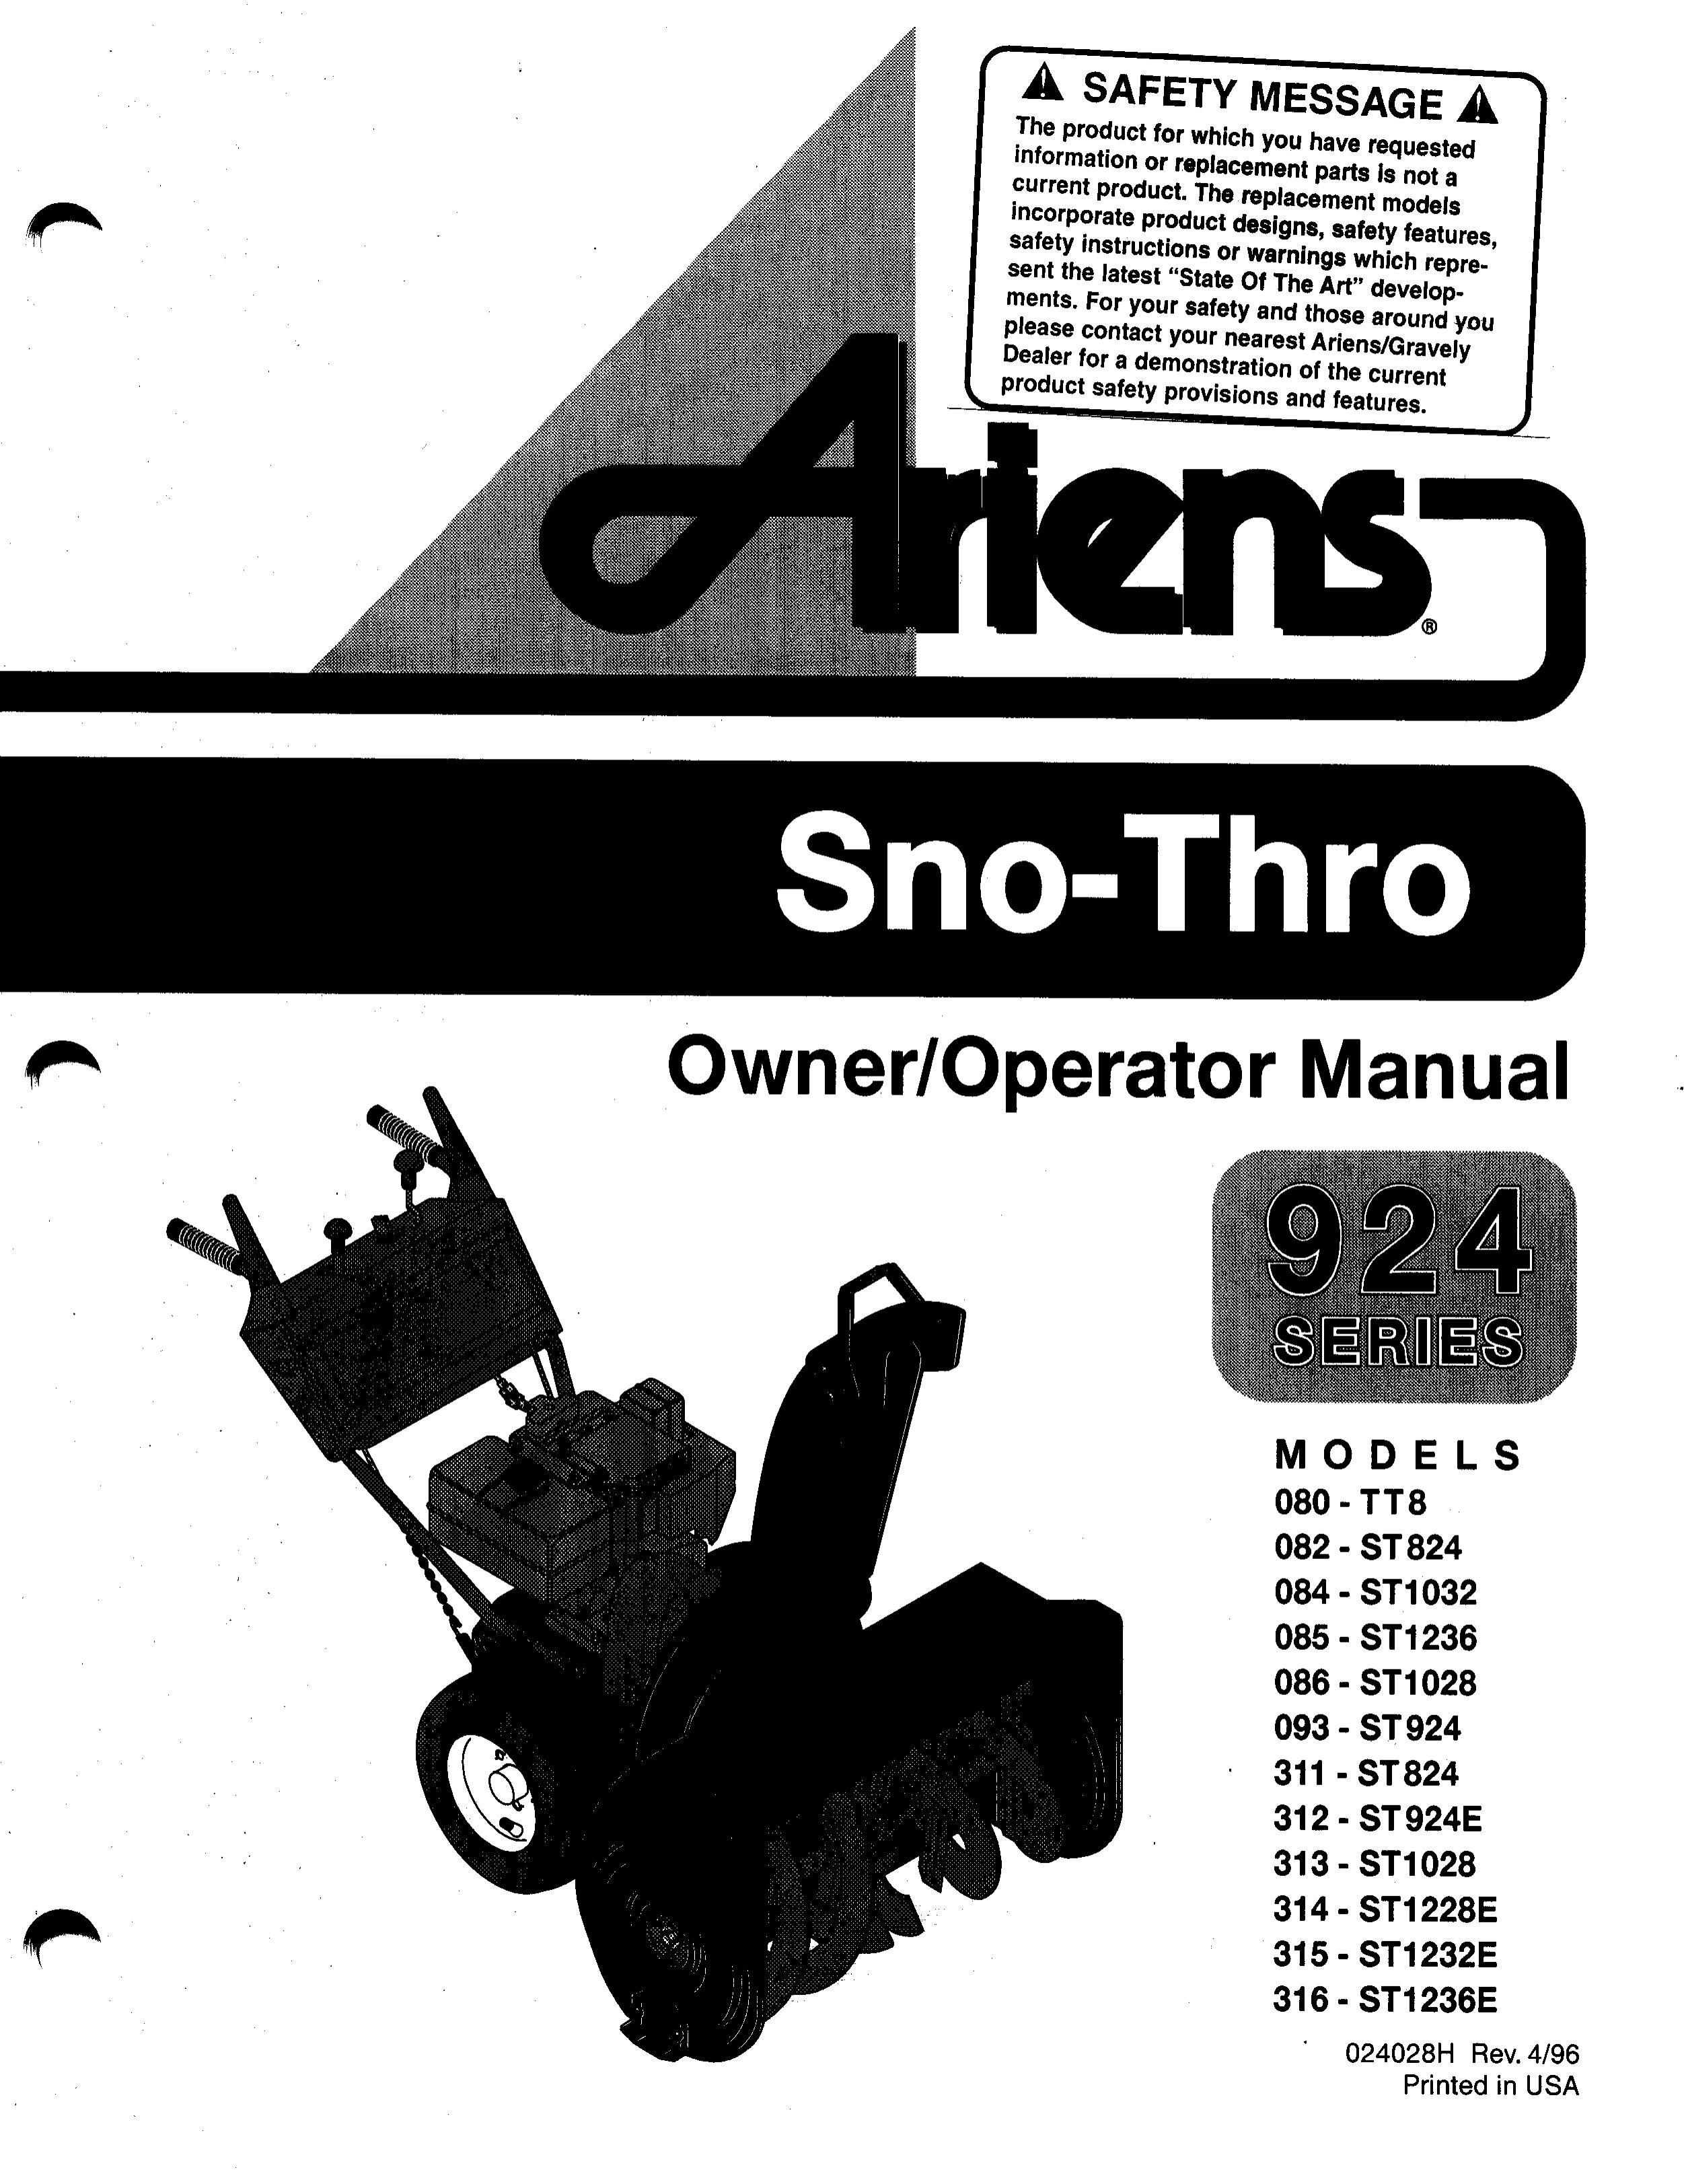 Ariens 313-ST1028 Snow Blower User Manual